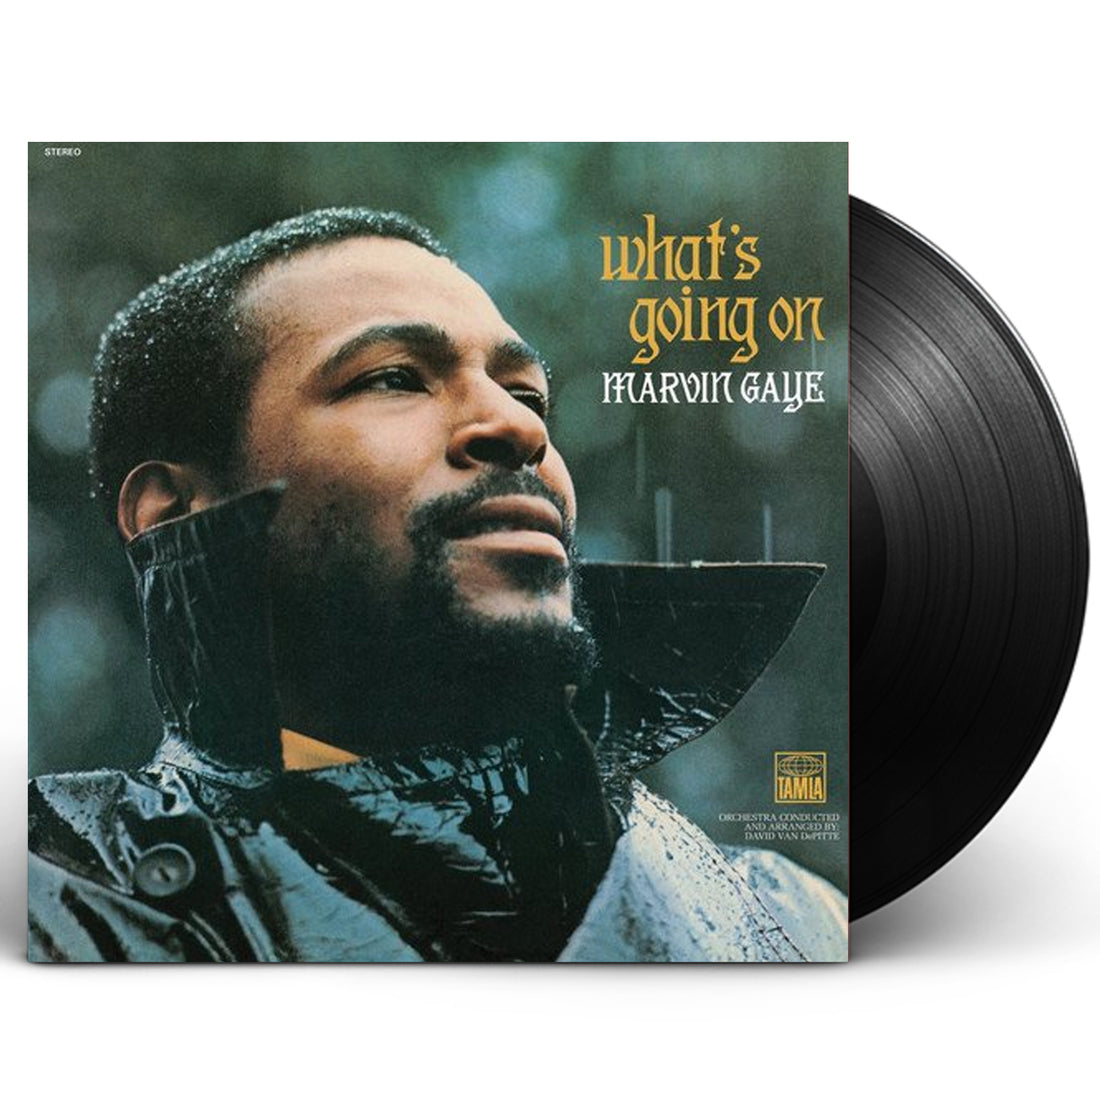 Marvin Gaye "What's Going On" LP Vinyl